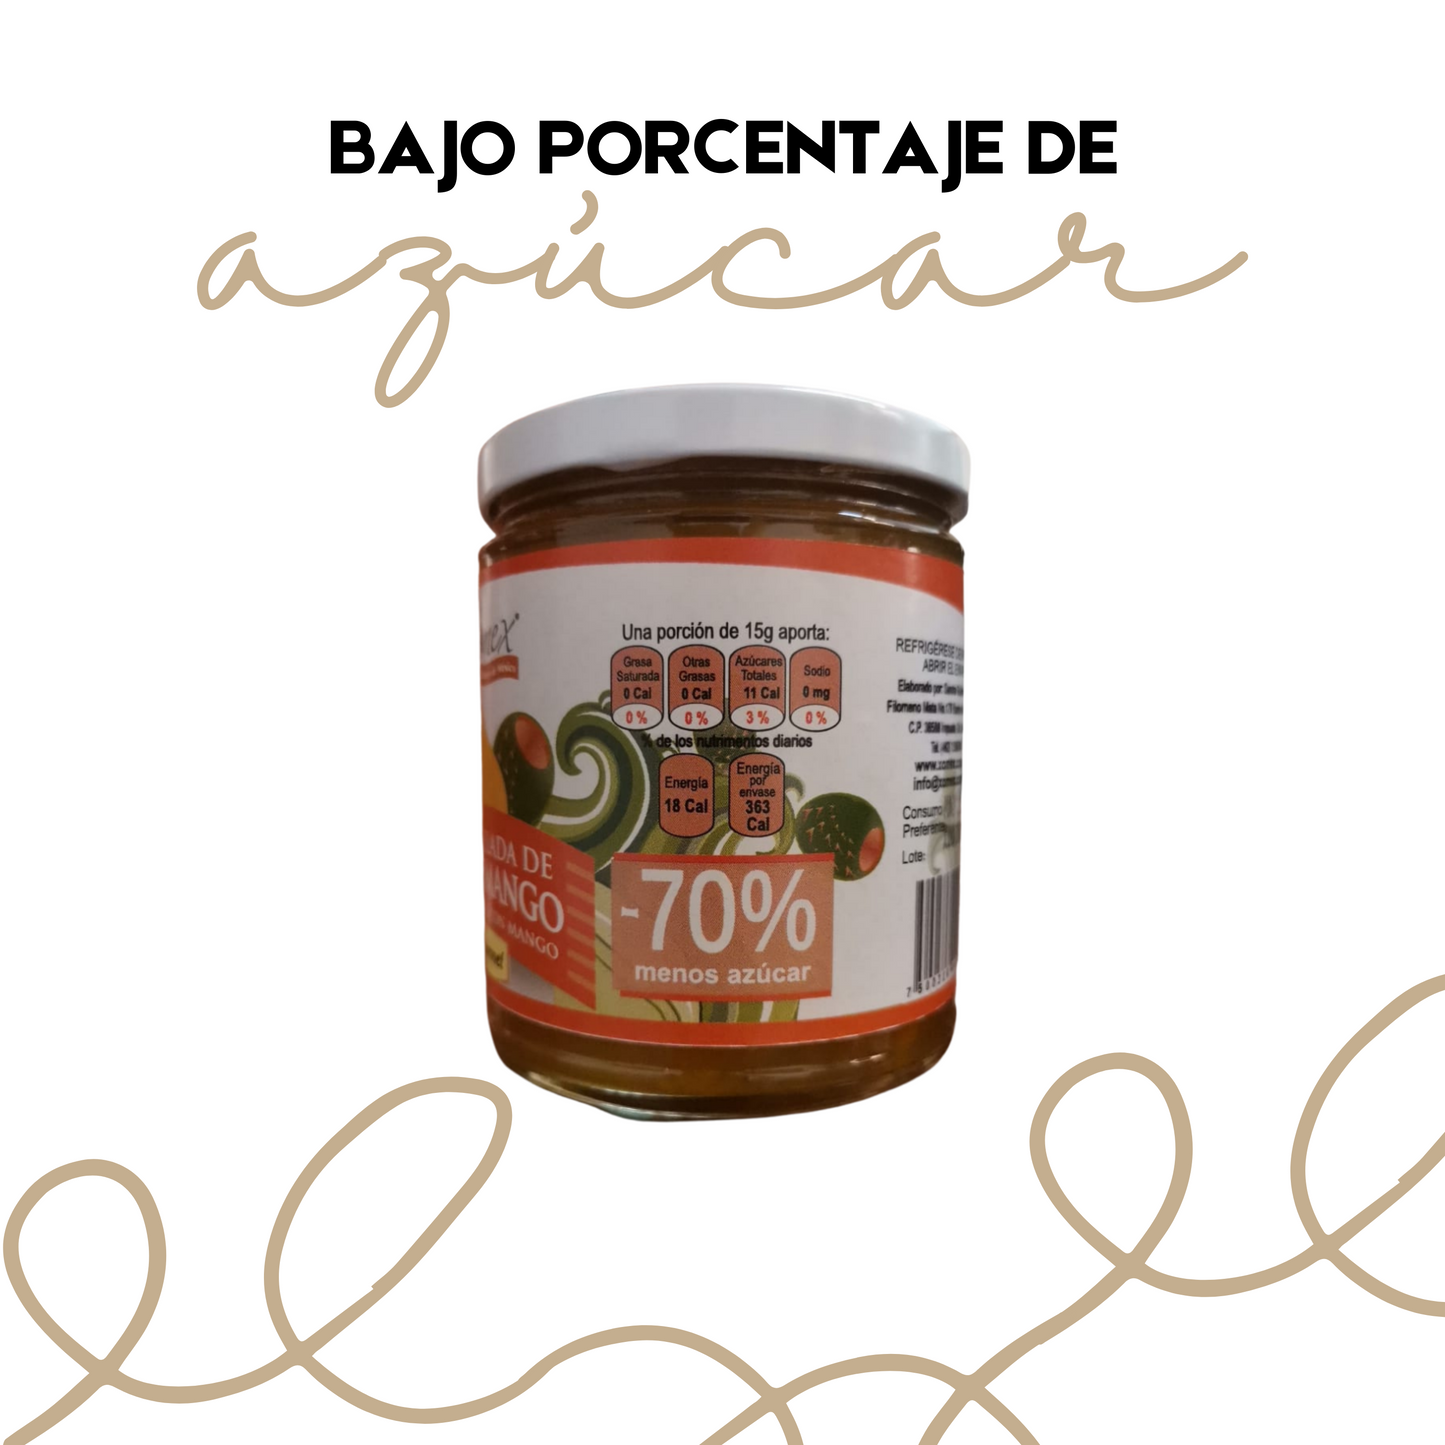 Mermelada de Xocomango | Xoconostle y Mango | 100% natural | 12 frascos | Mexpofood